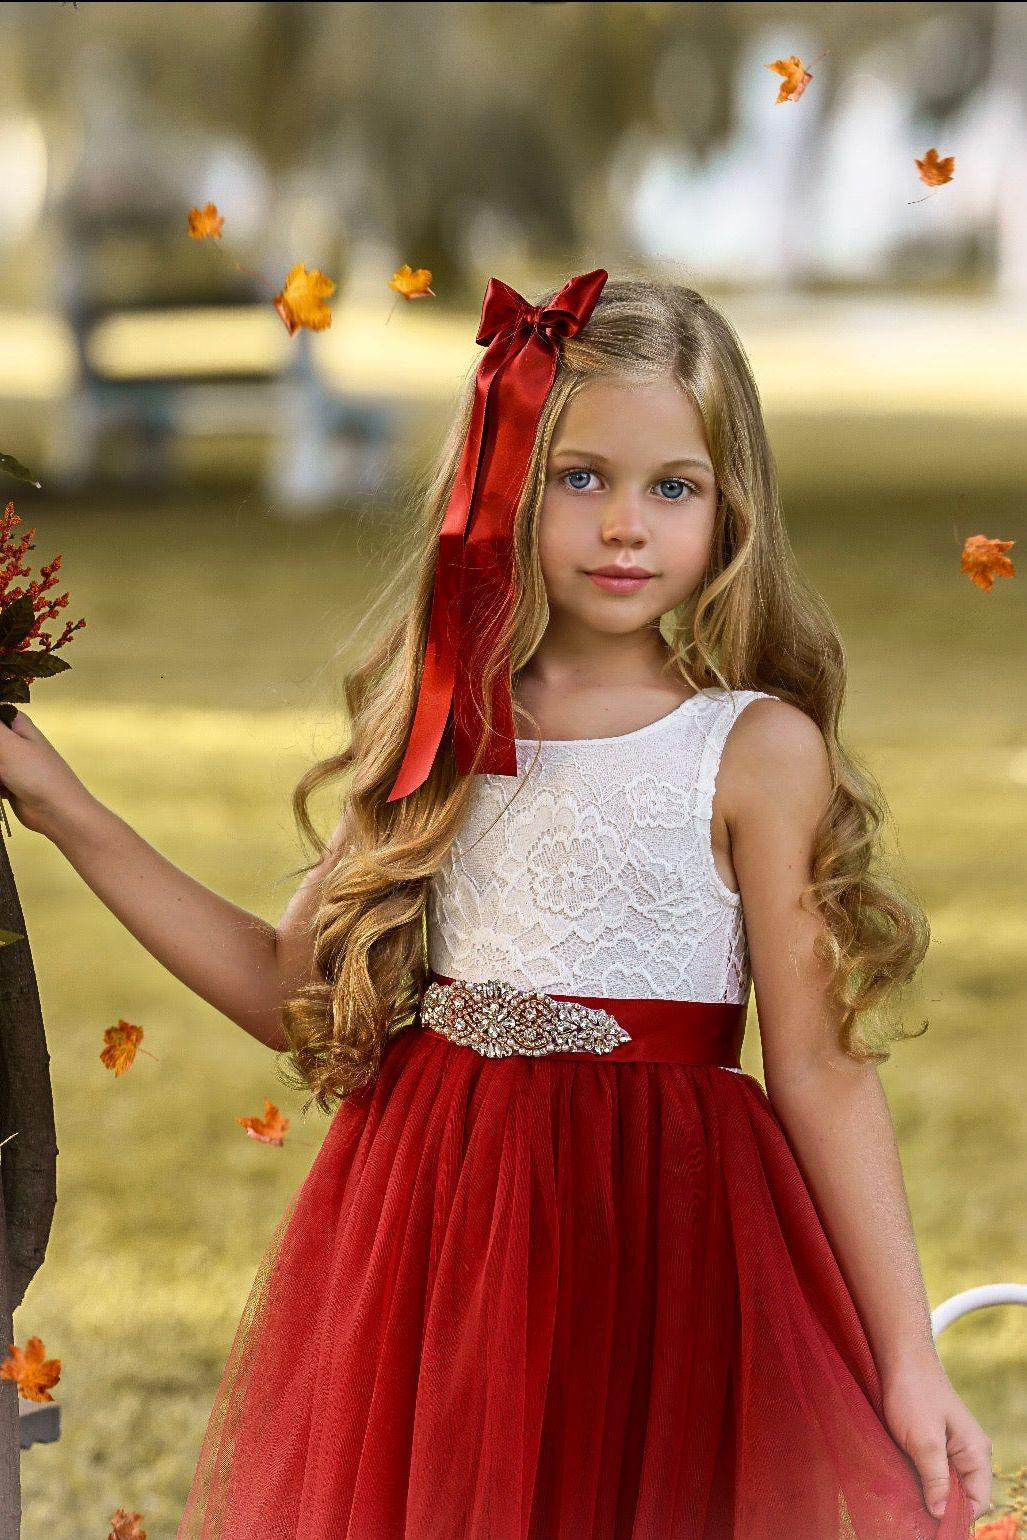 Sleeveless Burnt Orange Tulle and Lace Flower Girl Dress-magical fall dress - The Little Kitten Boutique